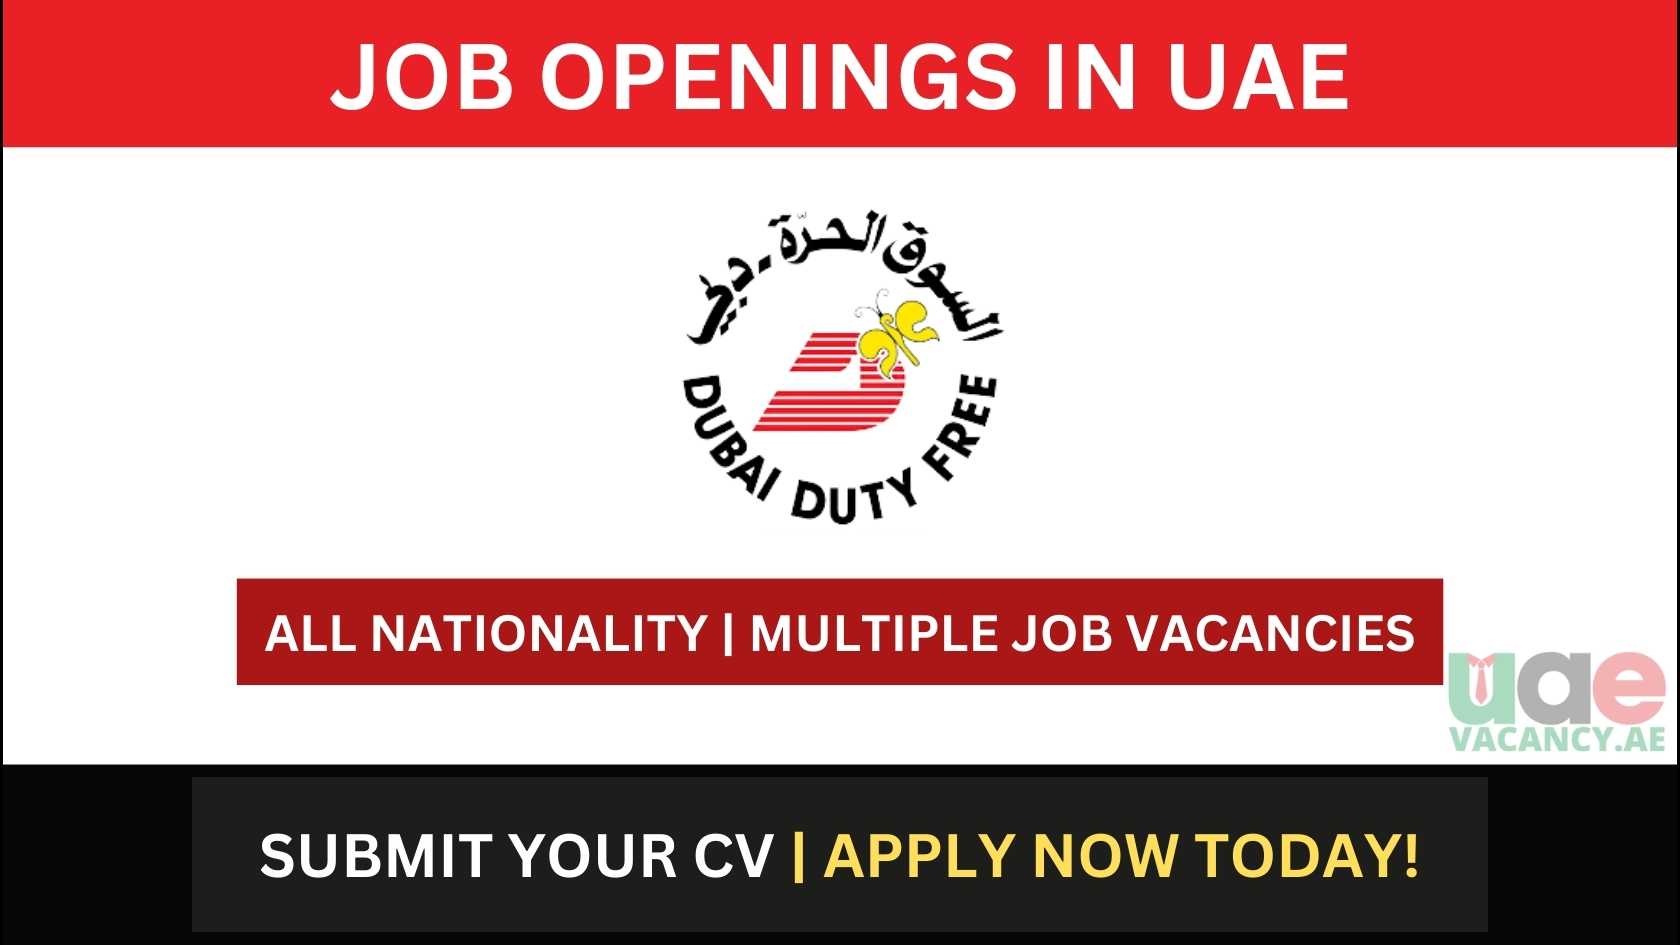 Dubai Duty Free Careers in UAE